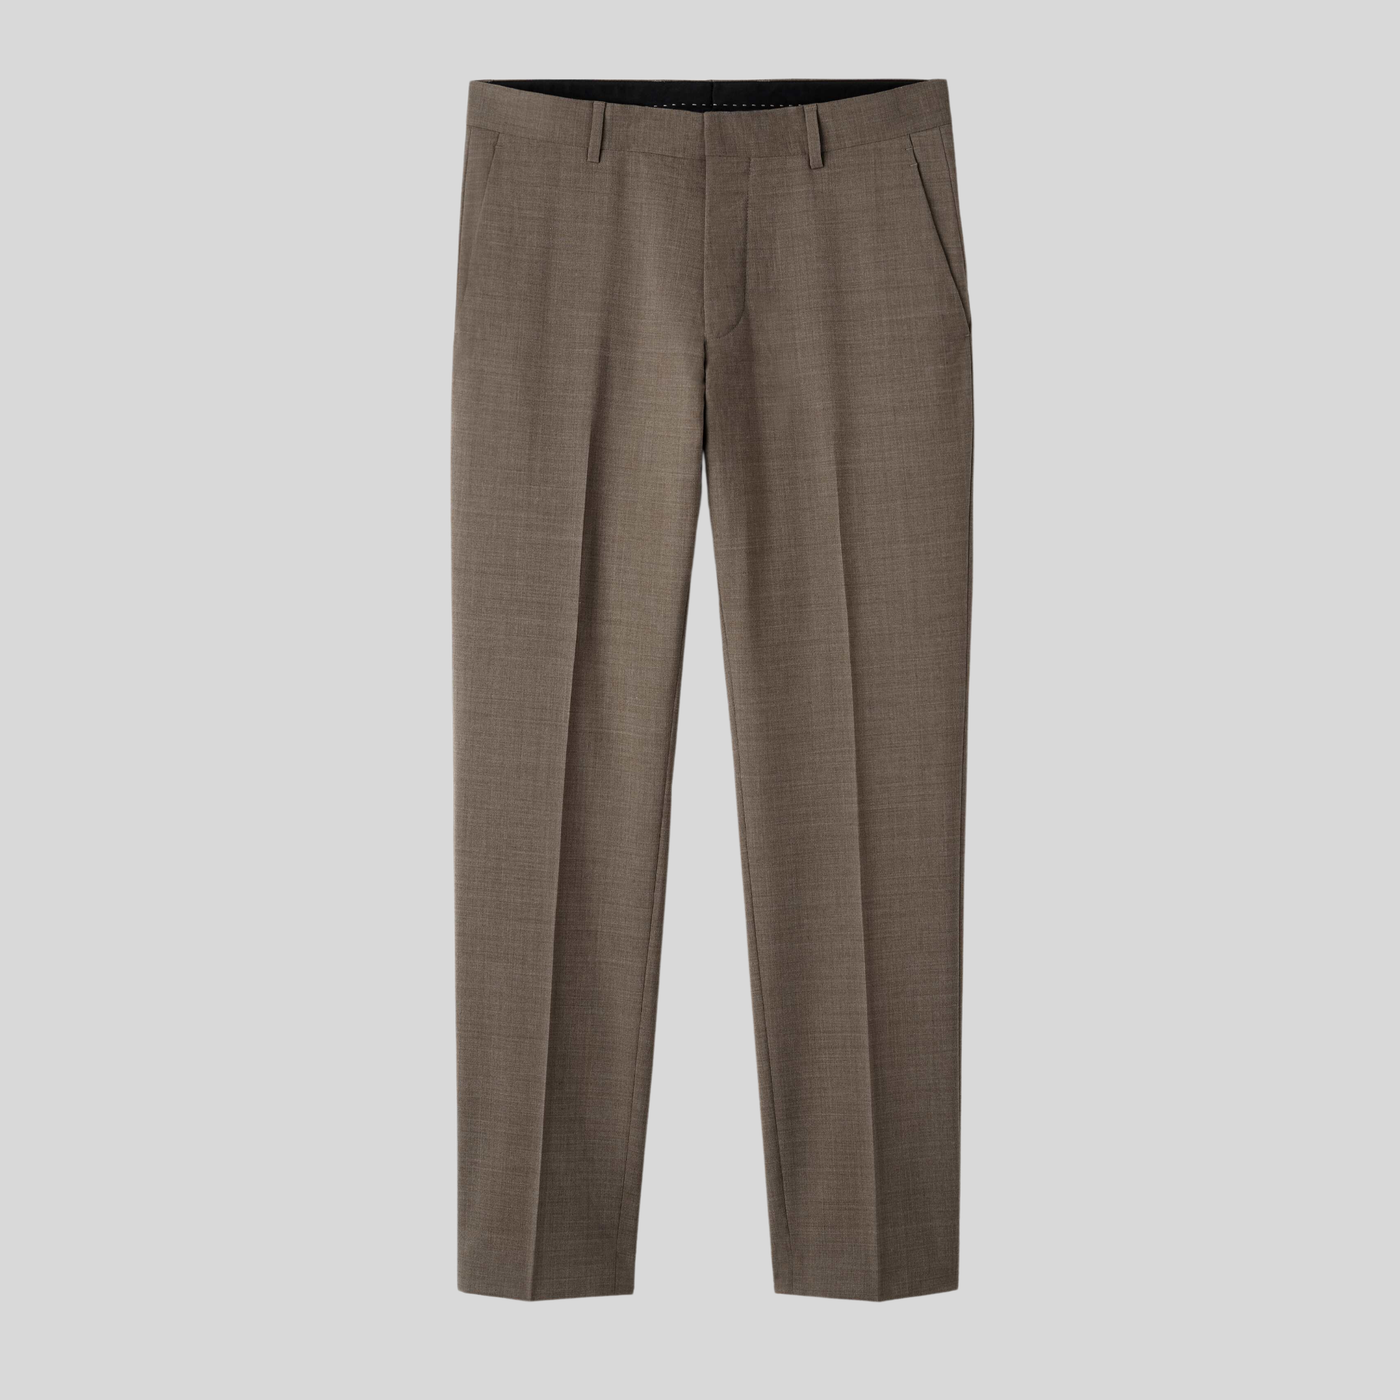 Gotstyle Fashion - Tiger Of Sweden Suits Plain Weave Pants - Olive